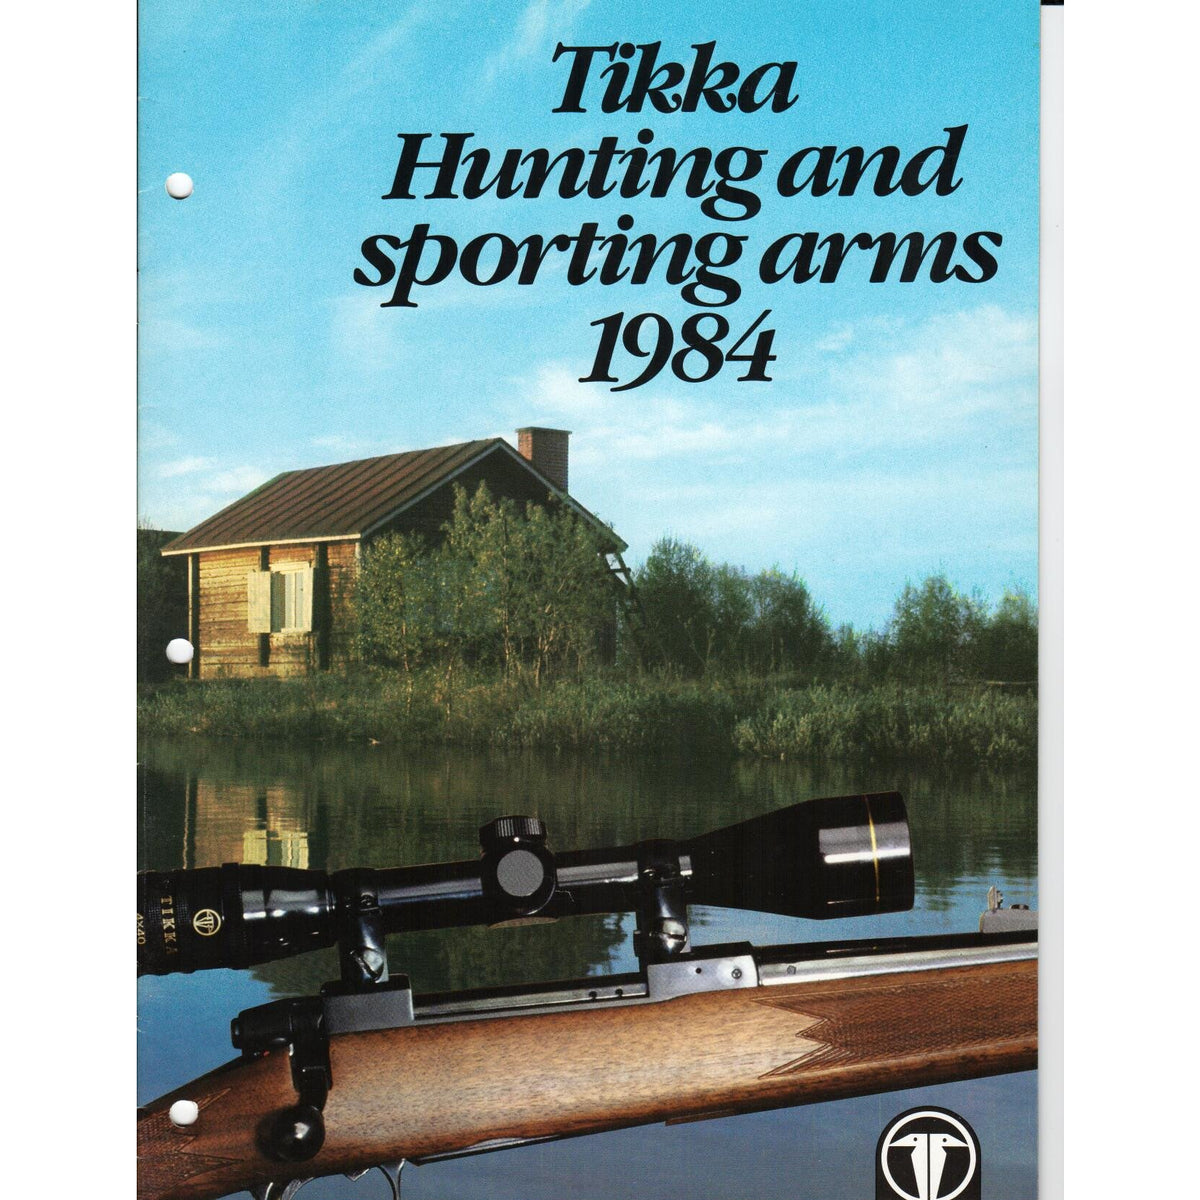 Tikka Hunting and Sporting Arms 1984